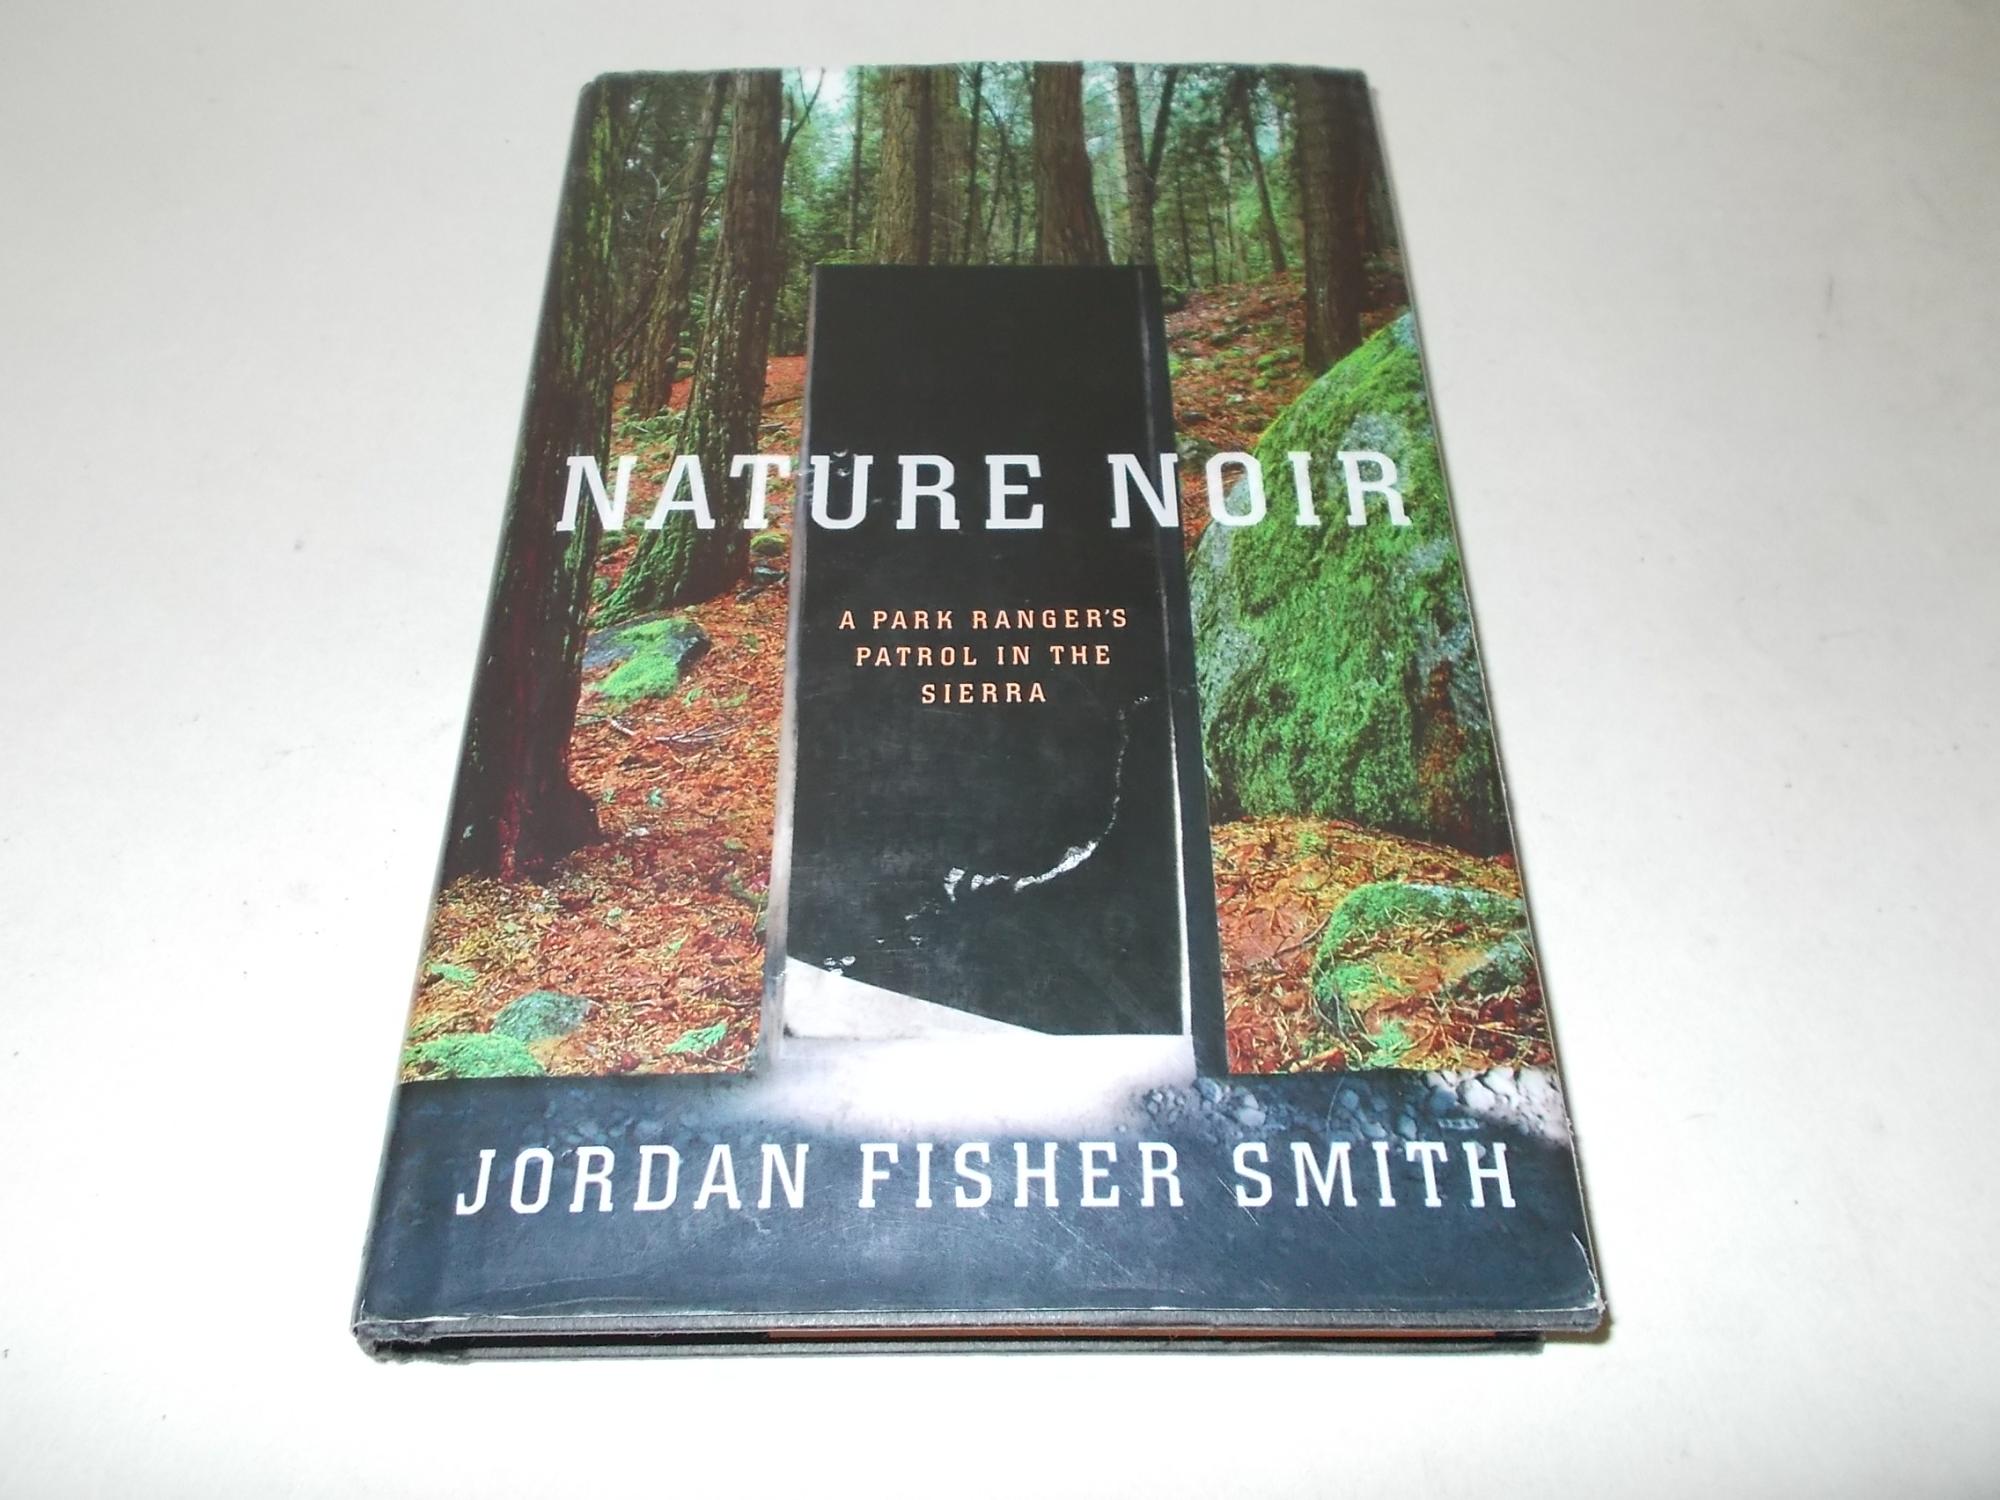 Nature Noir: A Park Ranger's Patrol in the Sierra by Jordan Fisher Smith